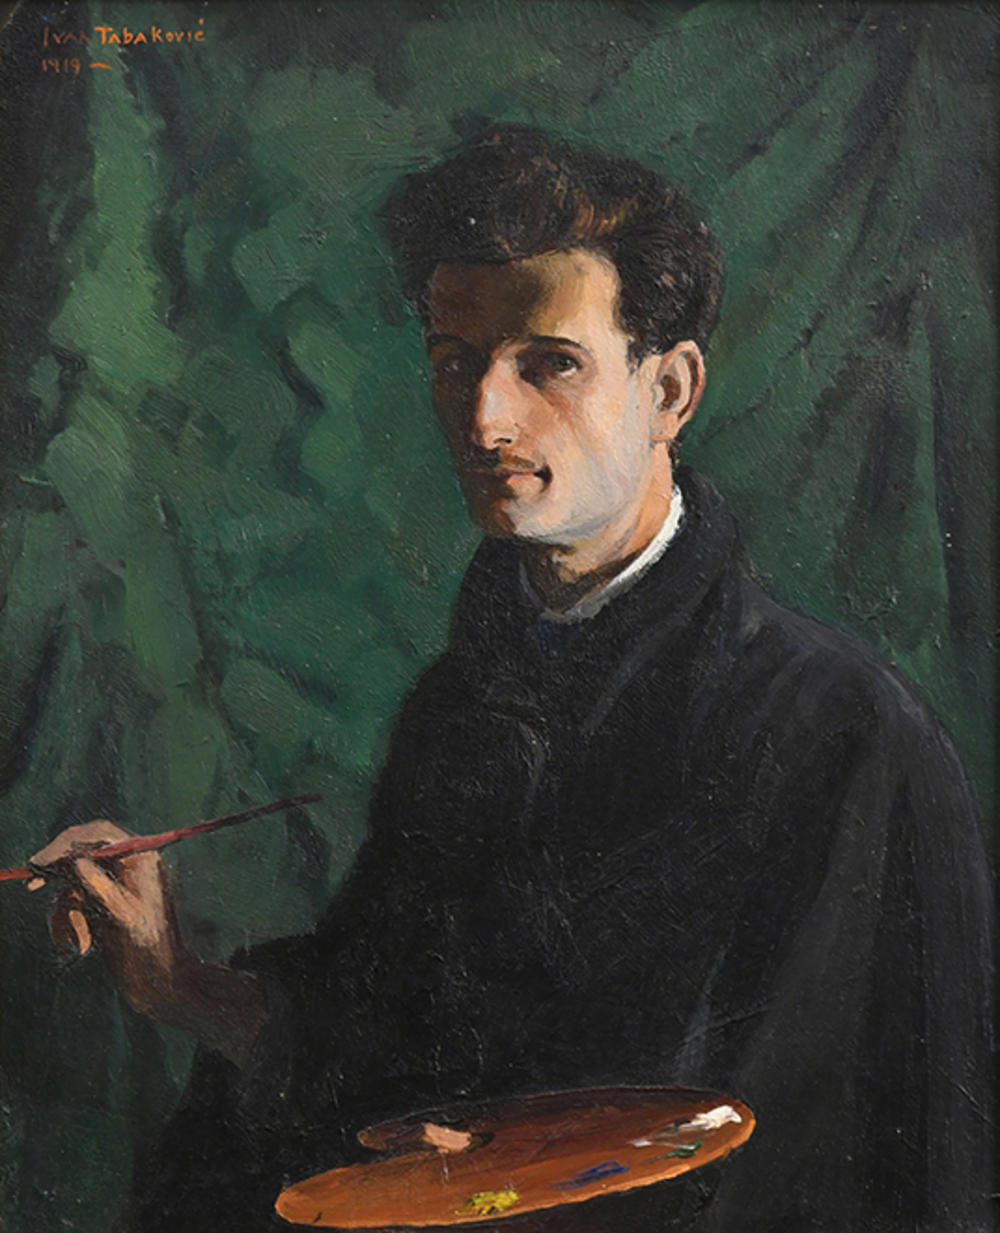 Ivan Tabaković, Autoportret s paletom, 1919.